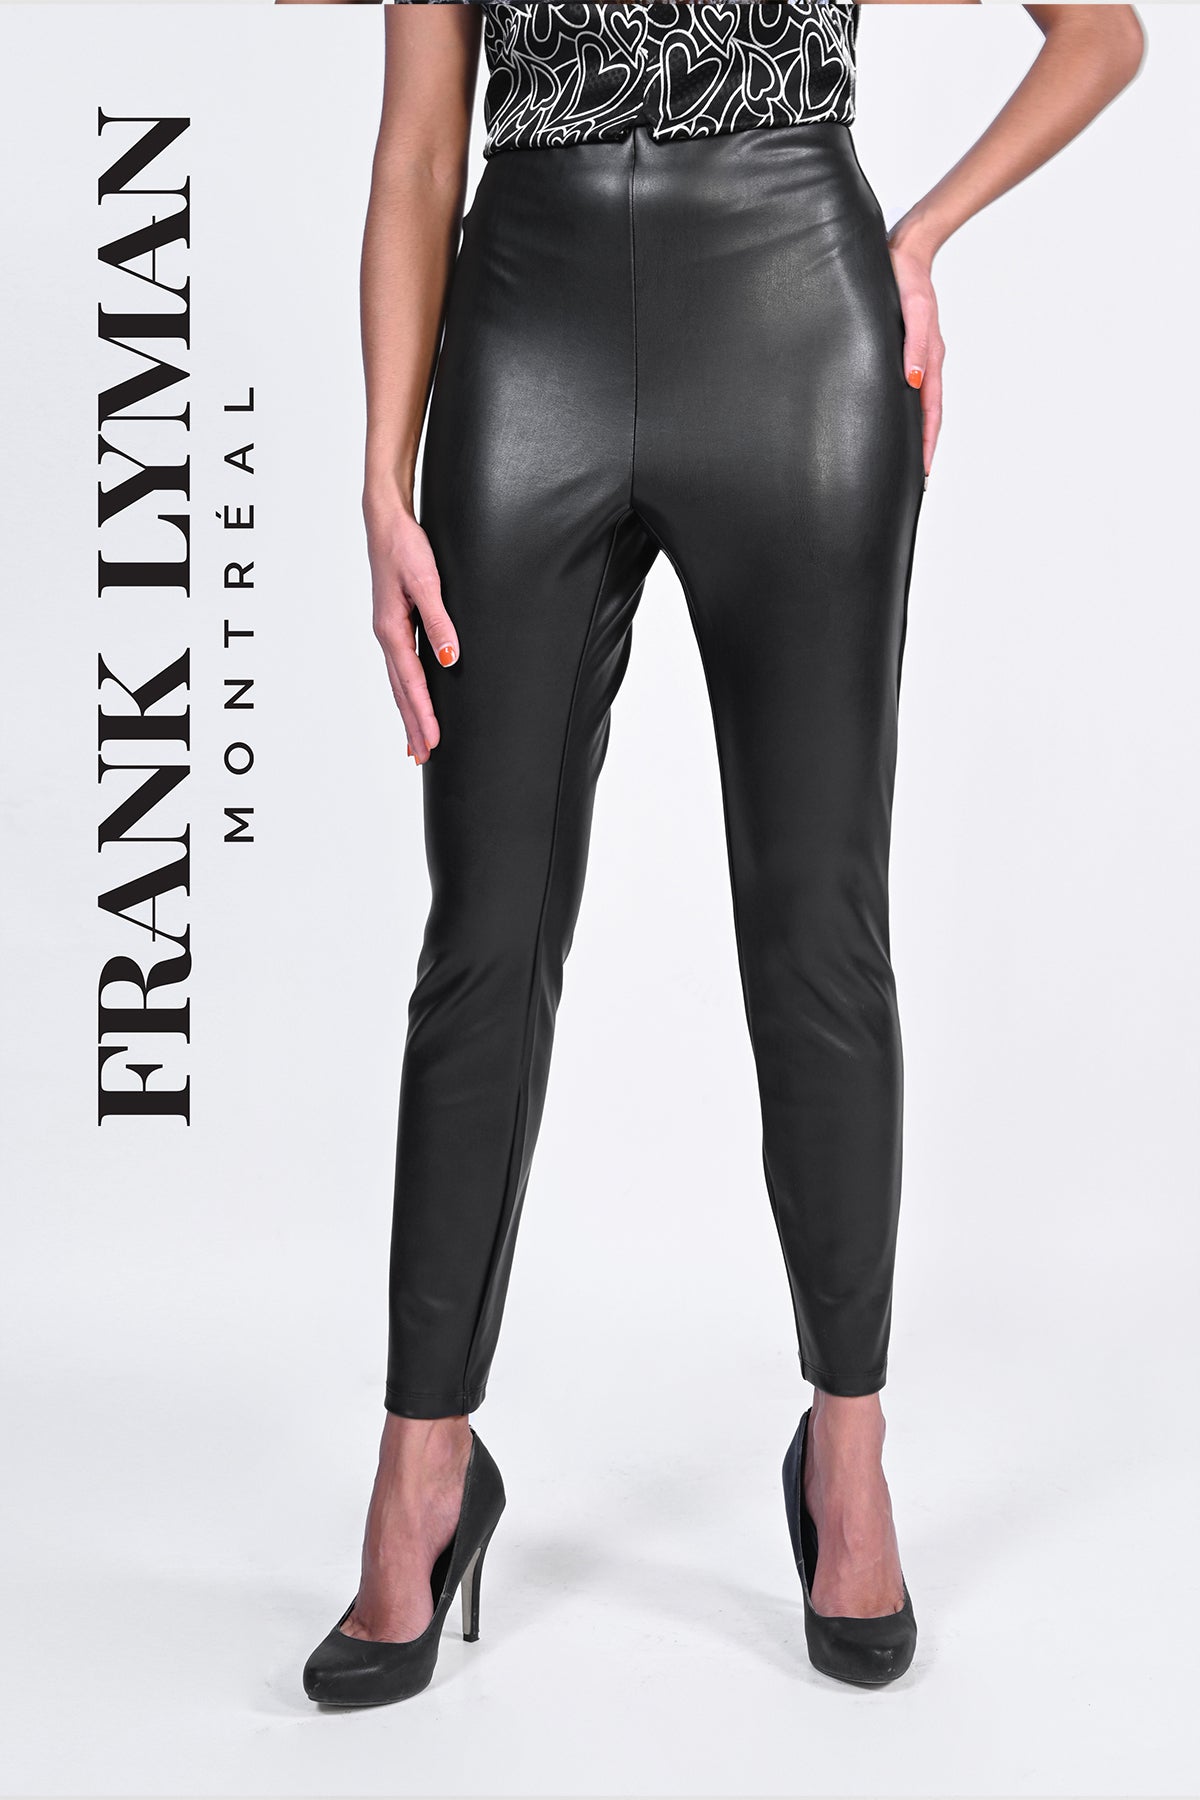 Frank Lyman Montreal Black Pants-Buy Frank Lyman Montreal Pants Online-Frank Lyman Montreal Leather Pants-Frank Lyman Montreal Pants Online